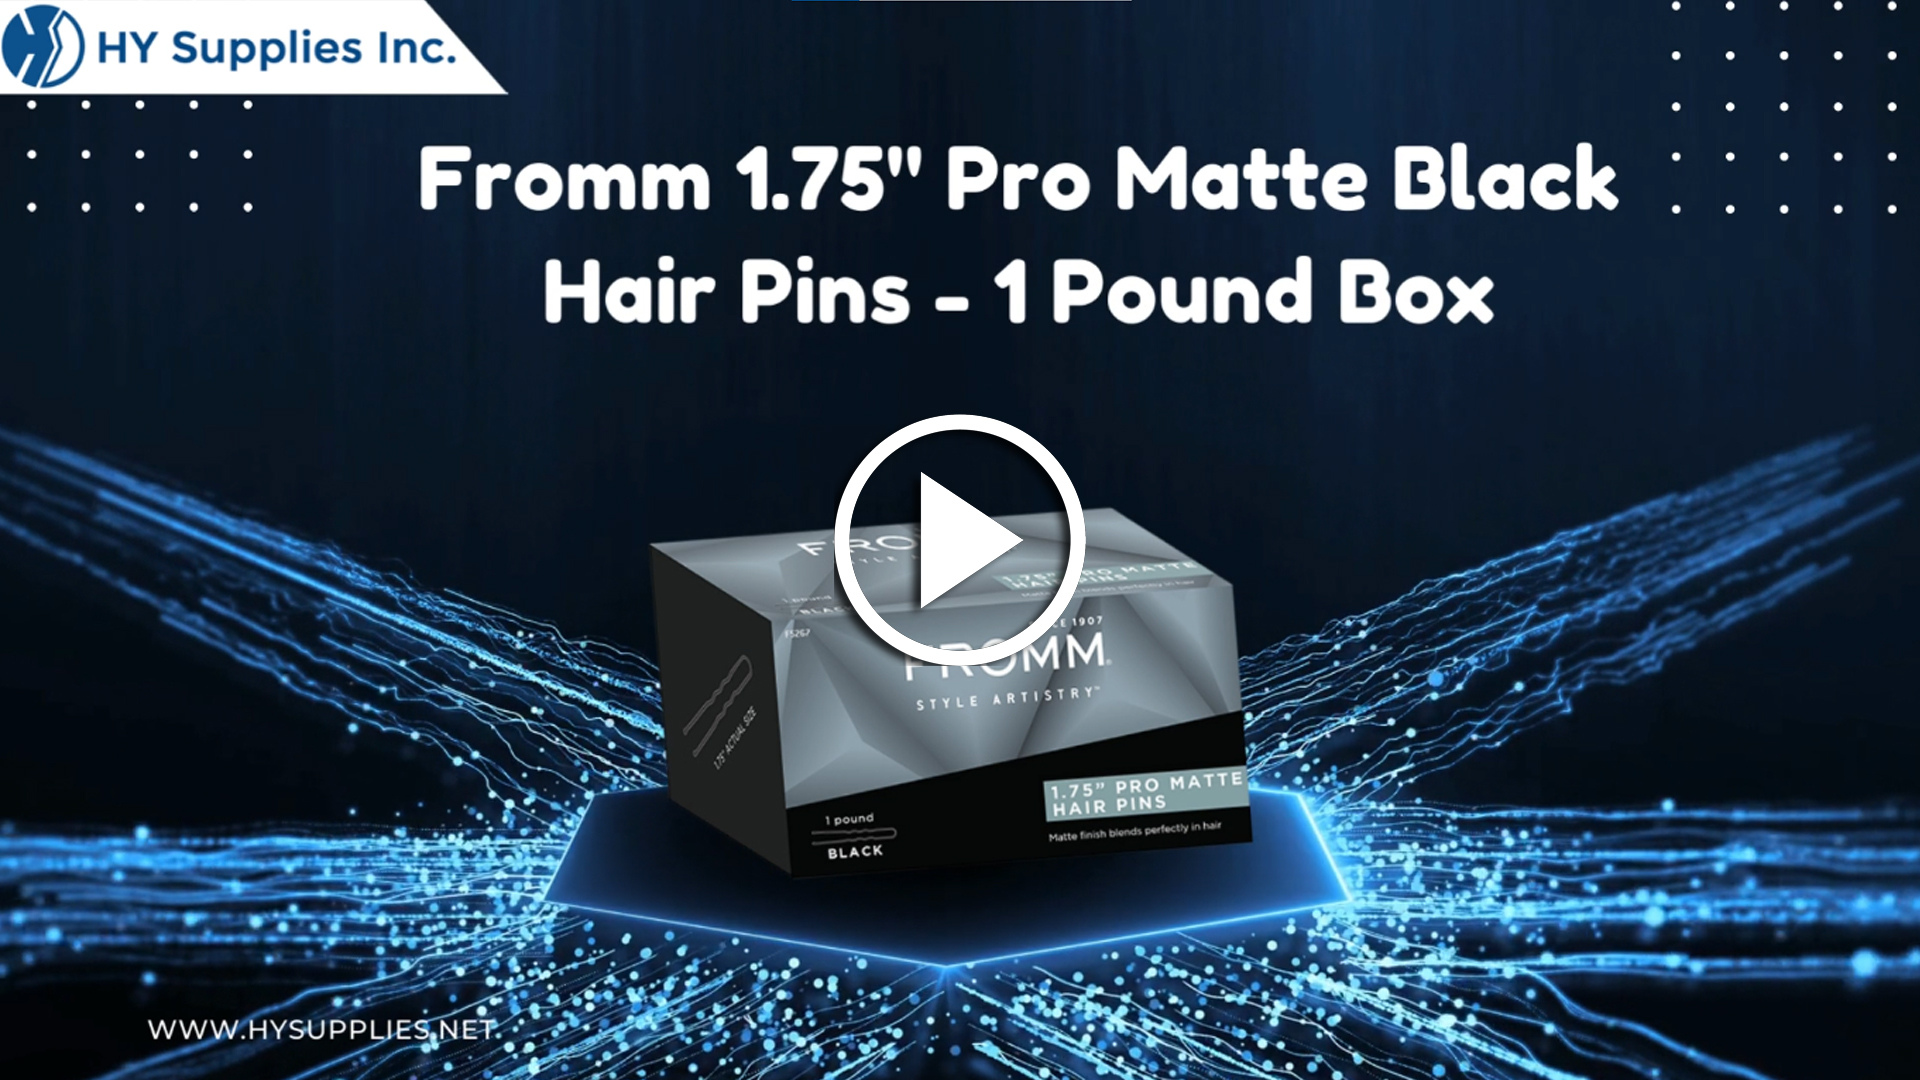 Fromm 1.75" Pro Matte Black Hair Pins - 1 Pound Box